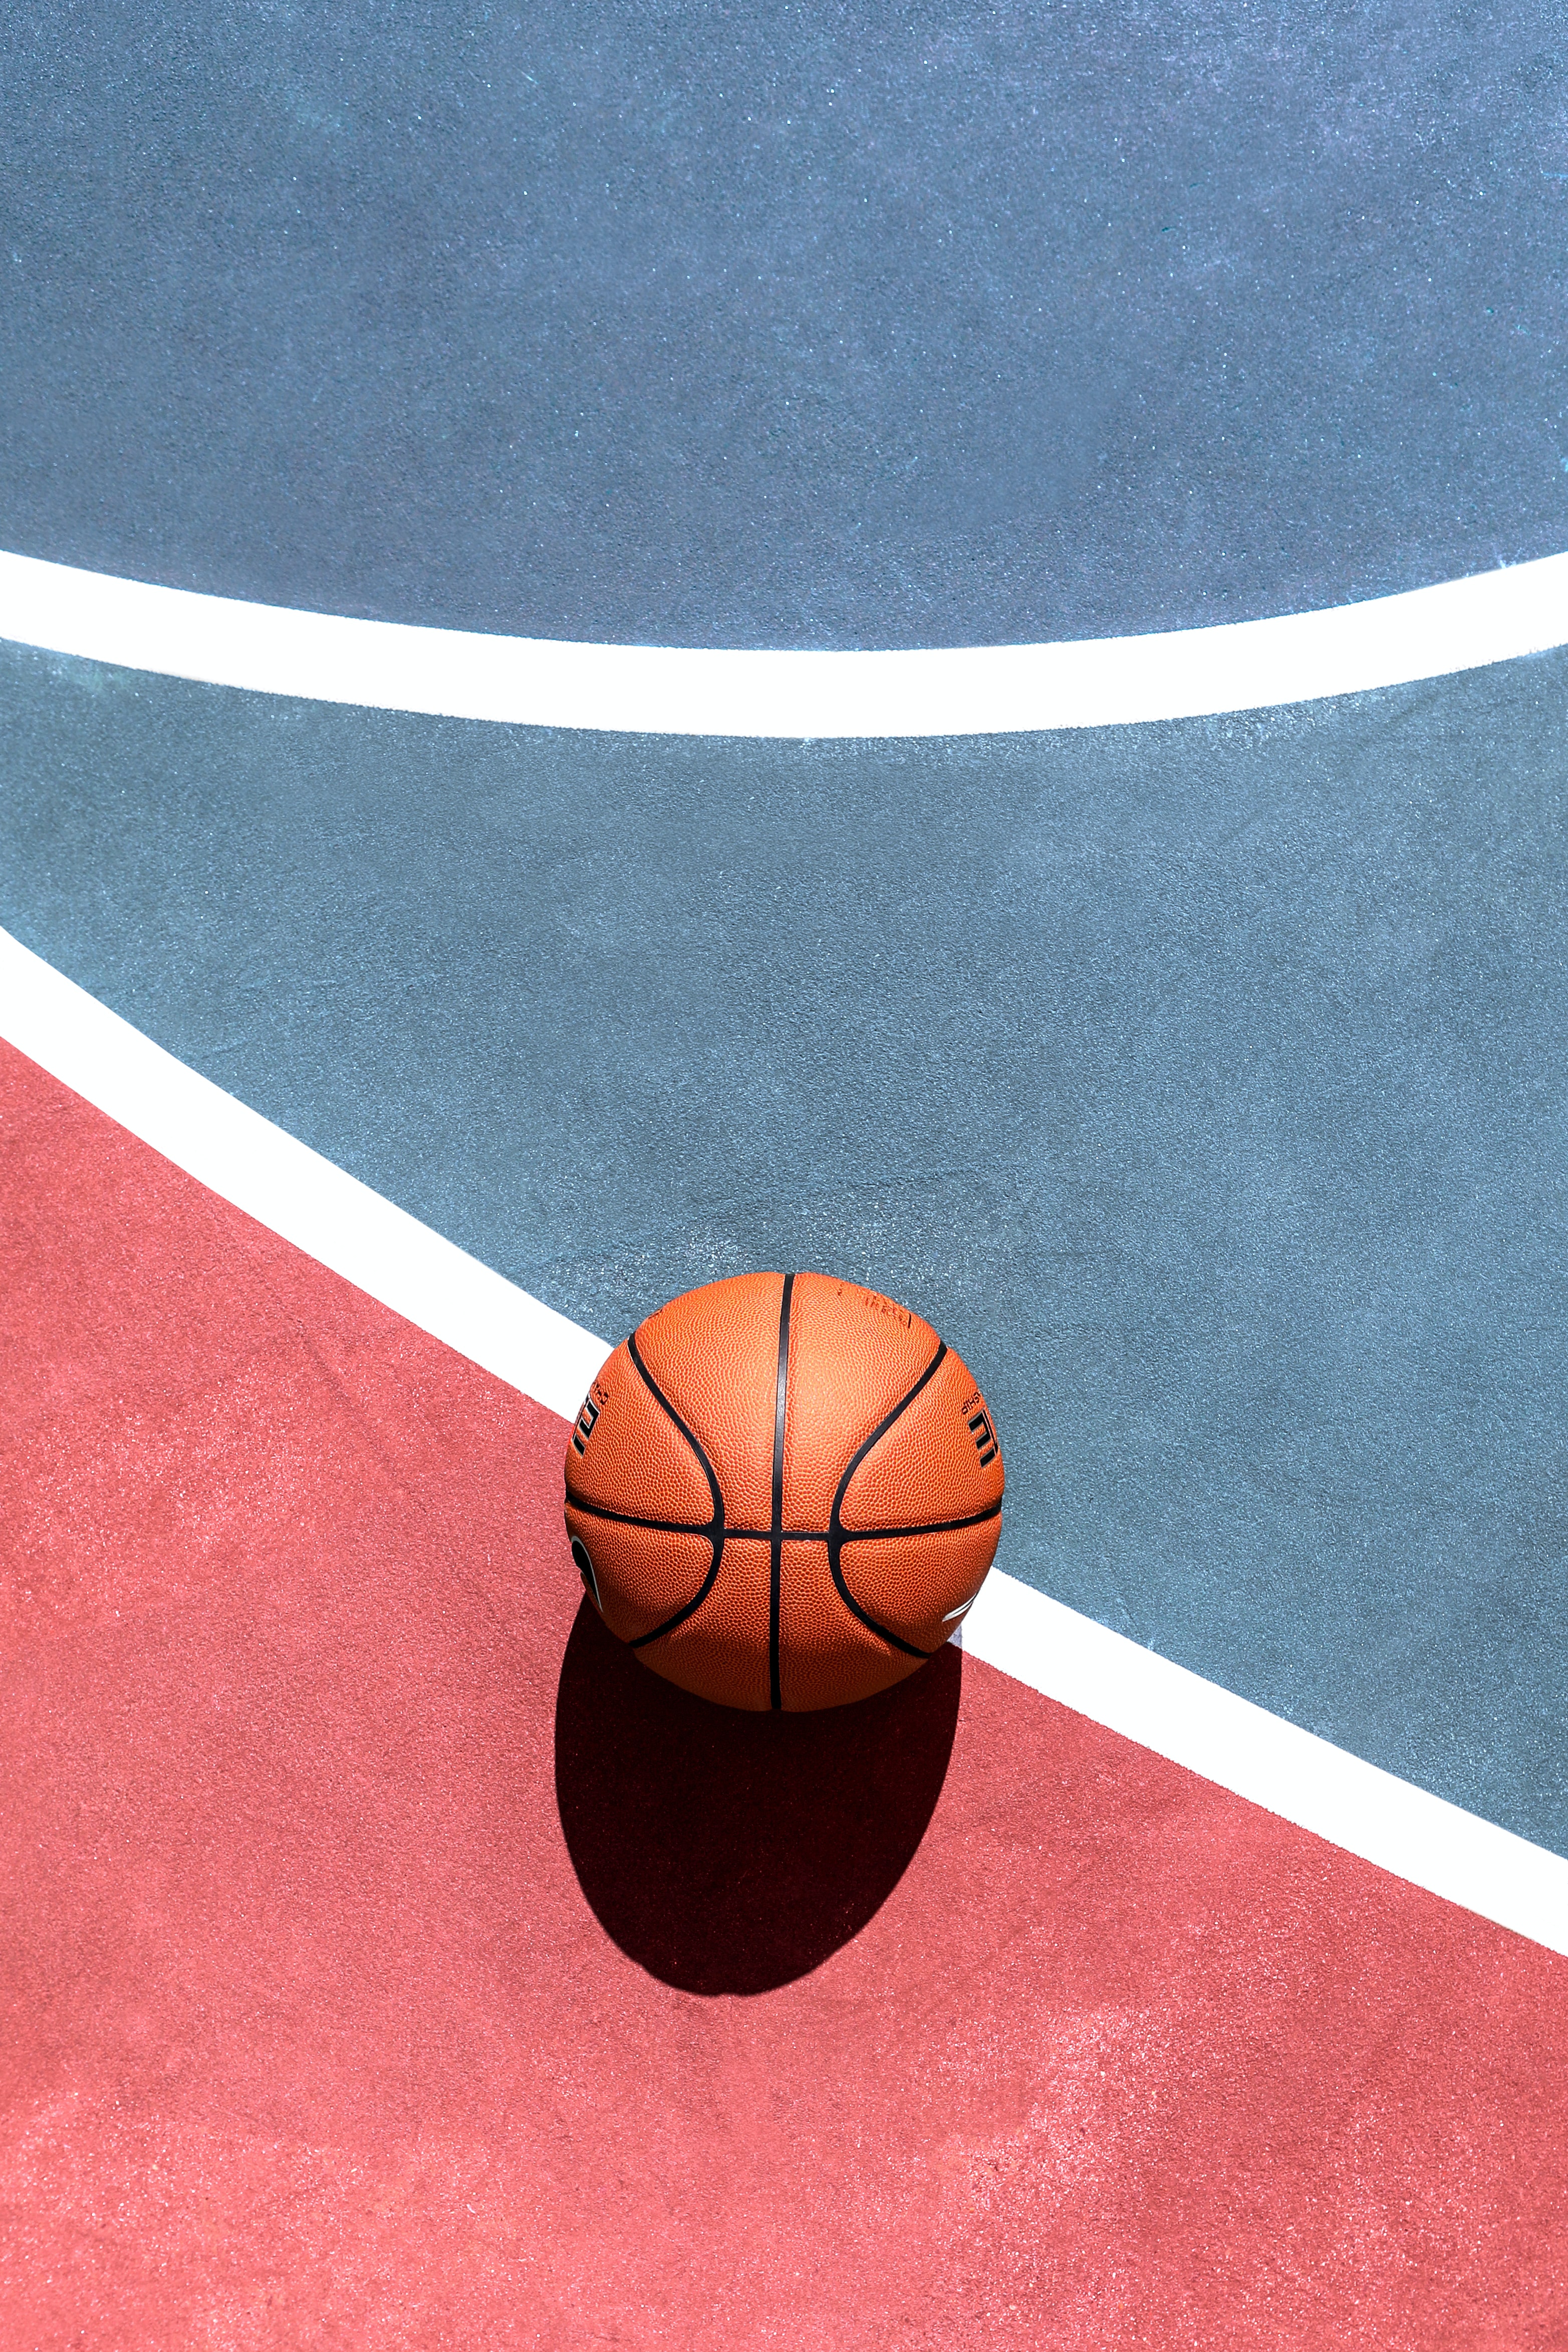 60597 descargar imagen deportes, baloncesto, bola, pelota: fondos de pantalla y protectores de pantalla gratis